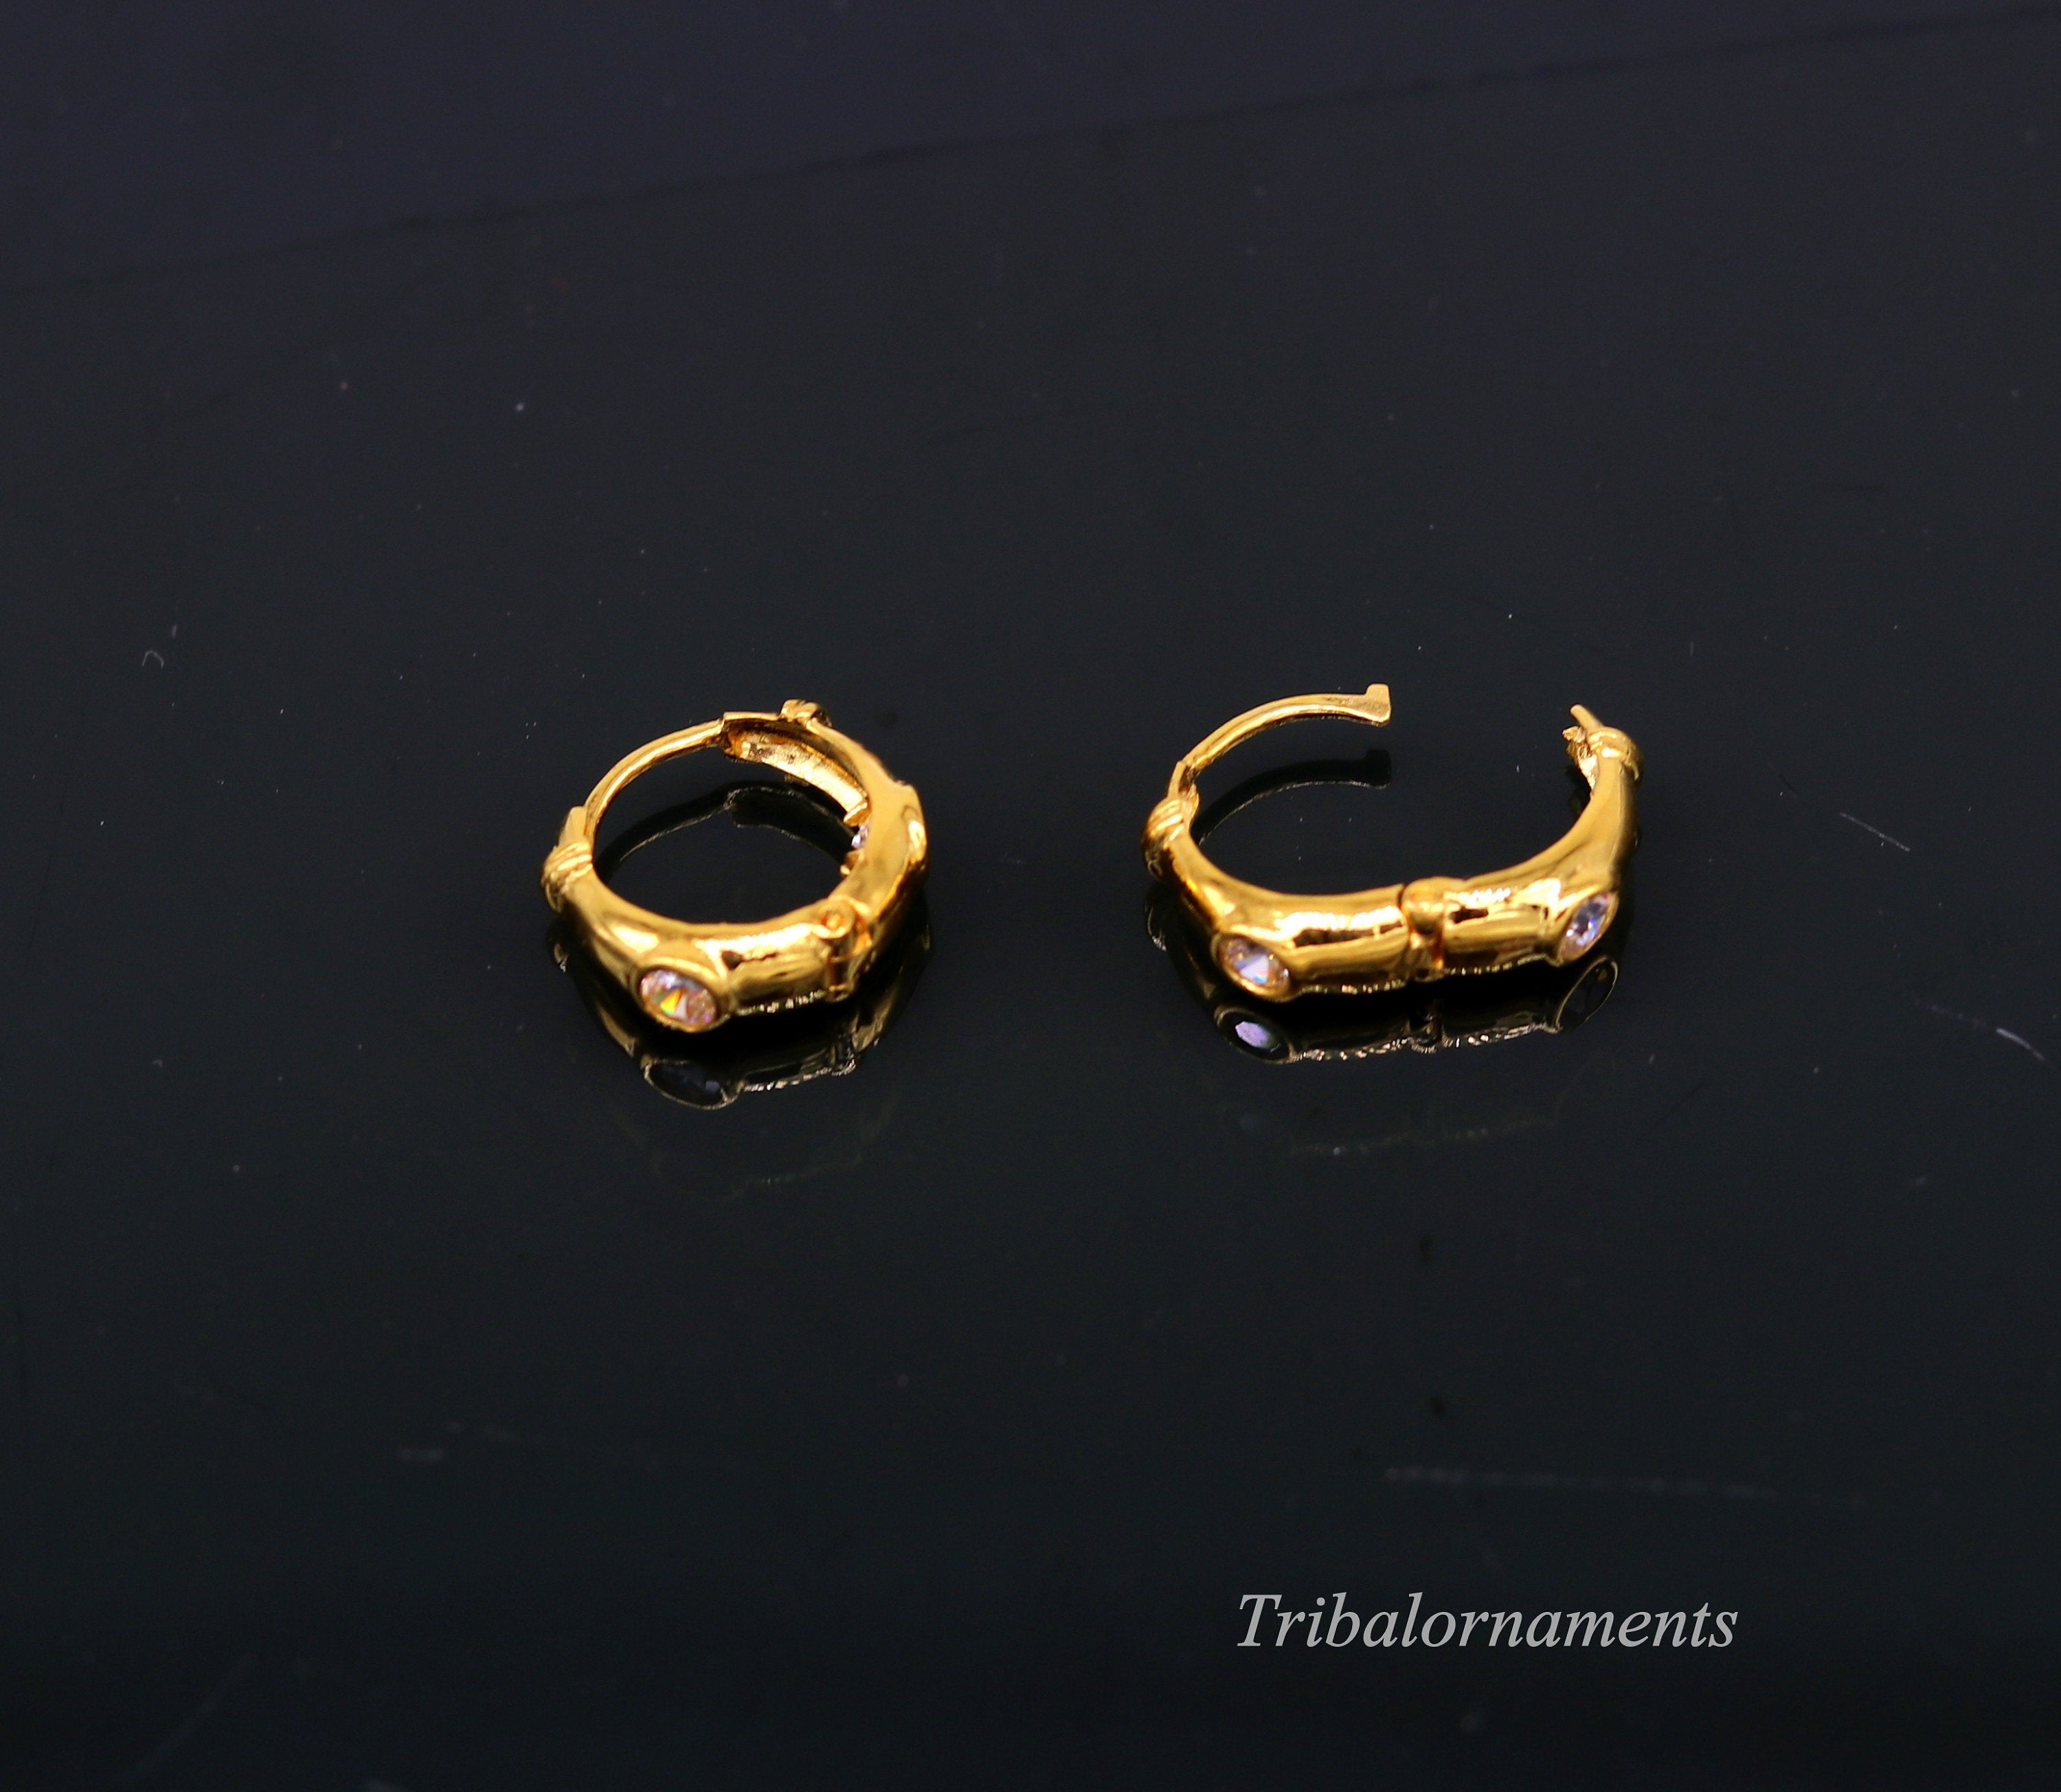 Buy Elegant Small Size Plain Gold Bali Earrings Design Online at Best Price